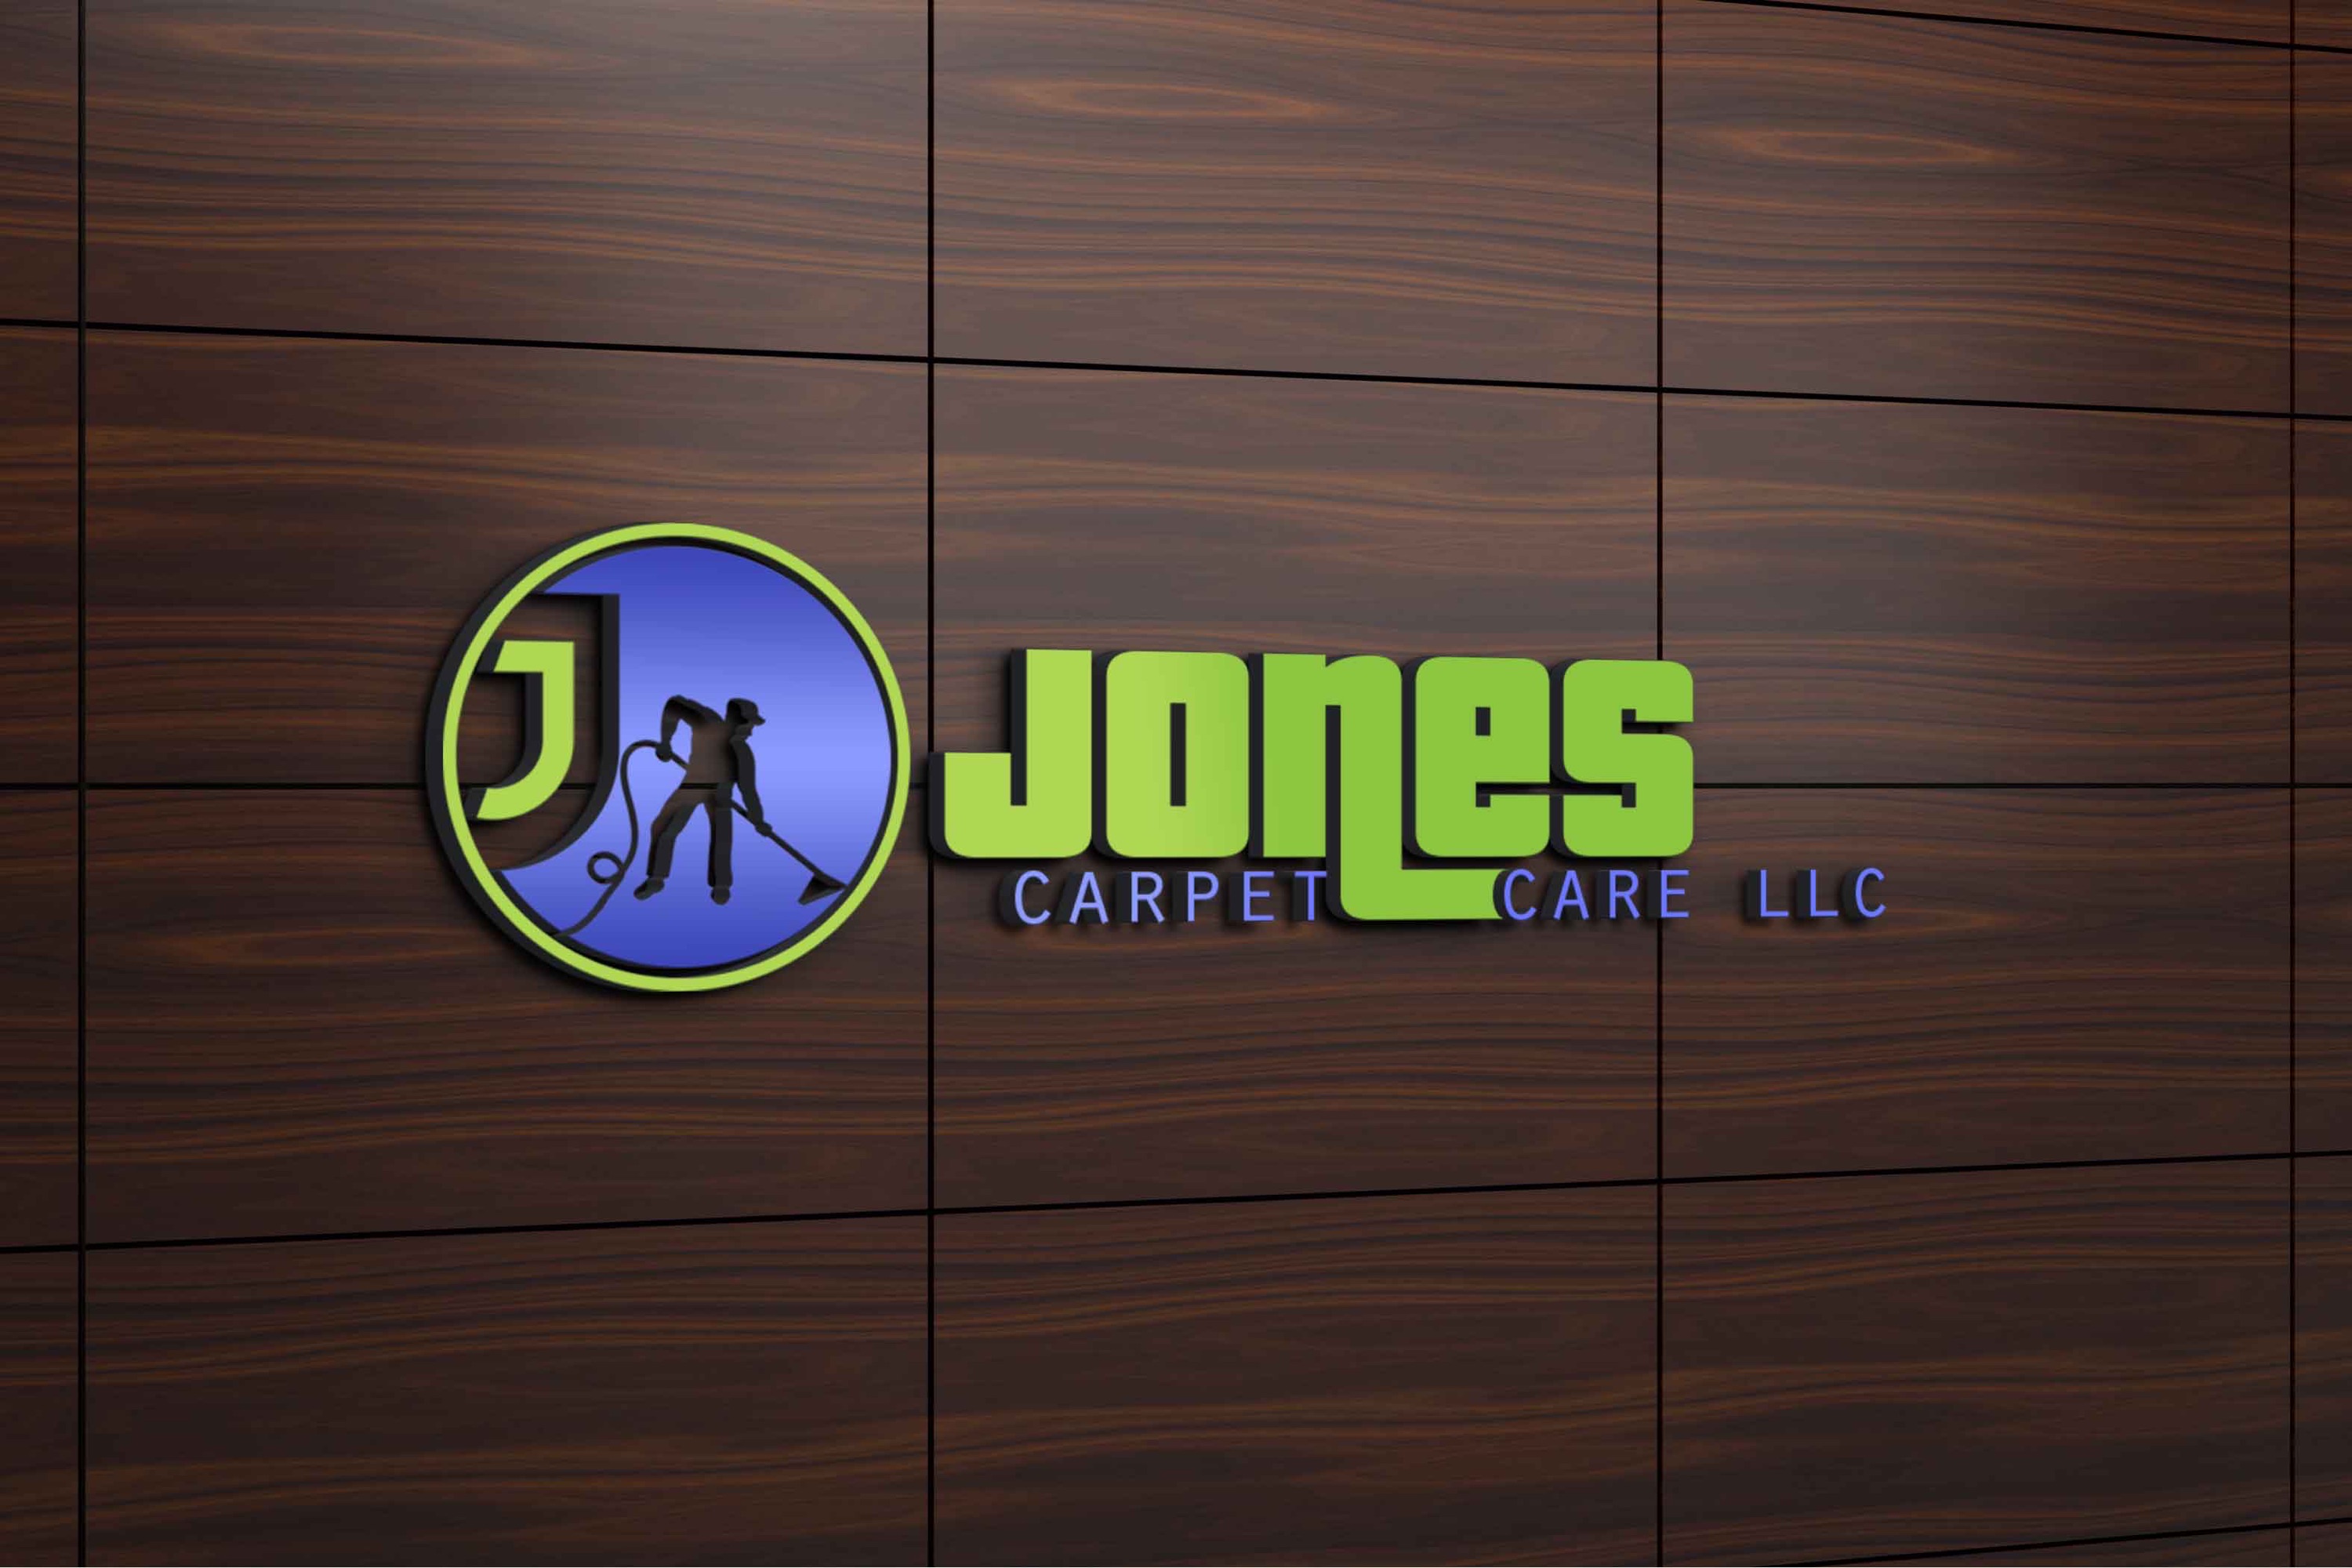 Jones Carpet Care, LLC Logo